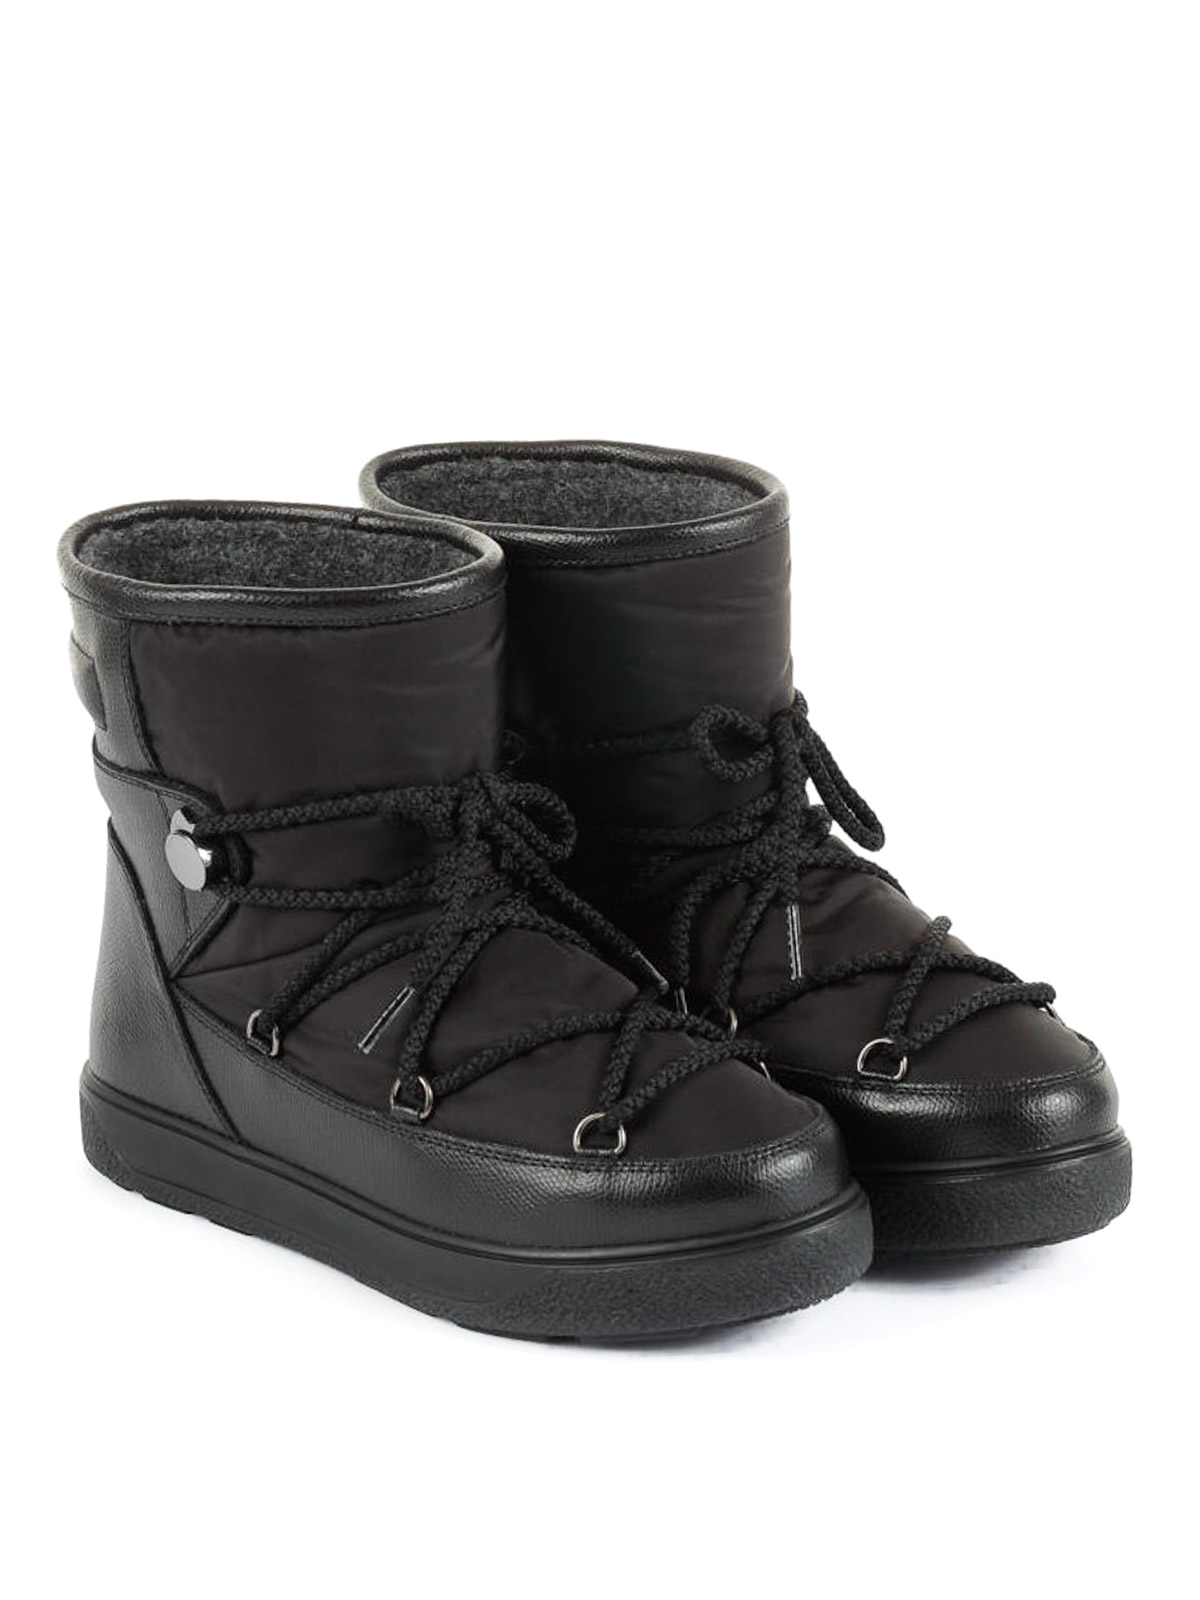 black après-ski boots - snow boots 